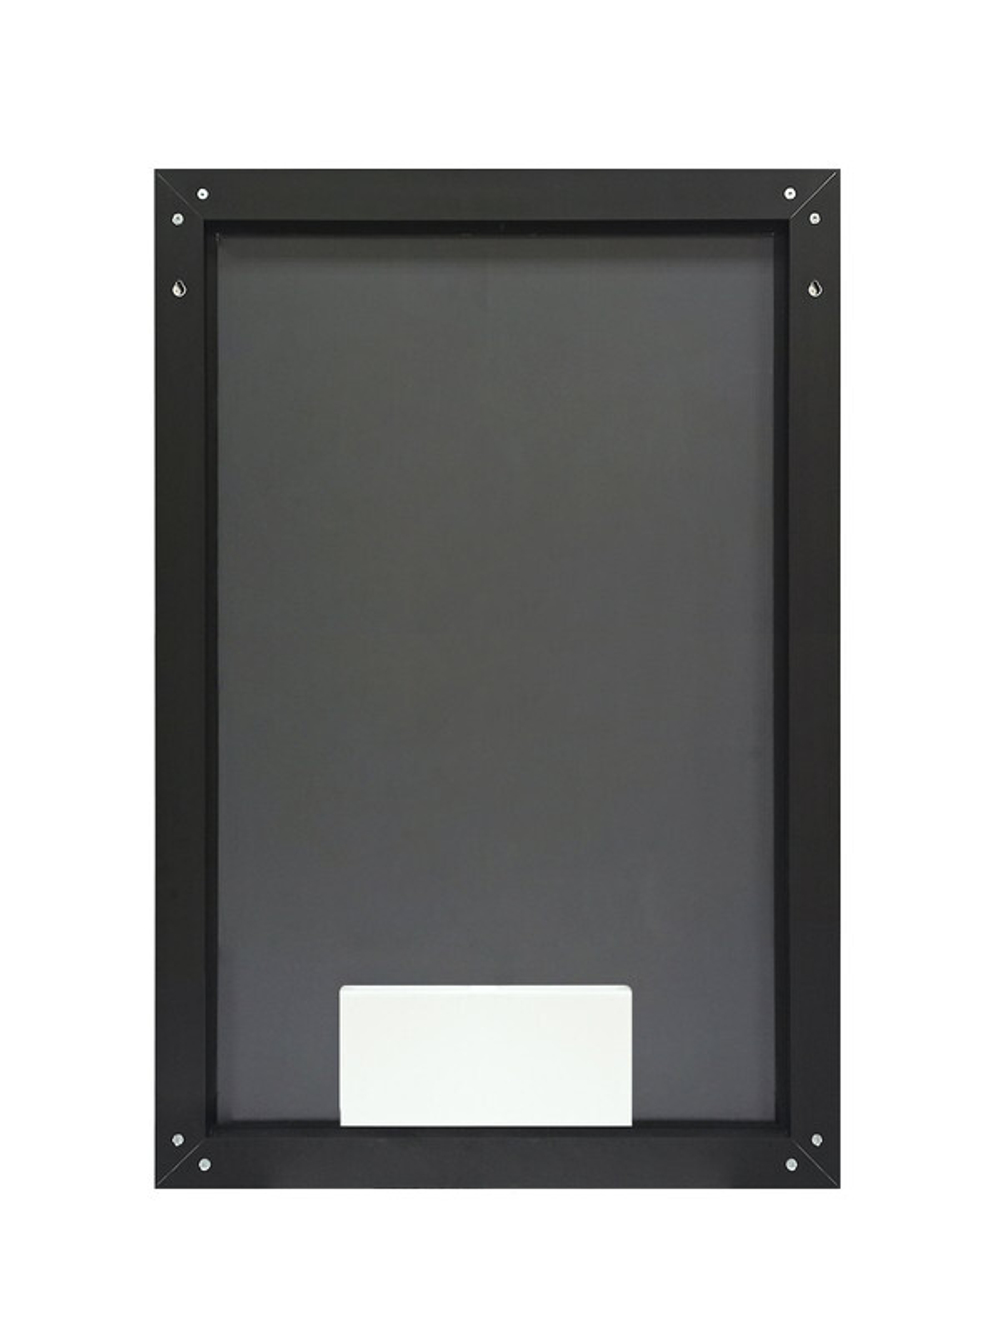 Зеркало "Frame black standart" 700x1000